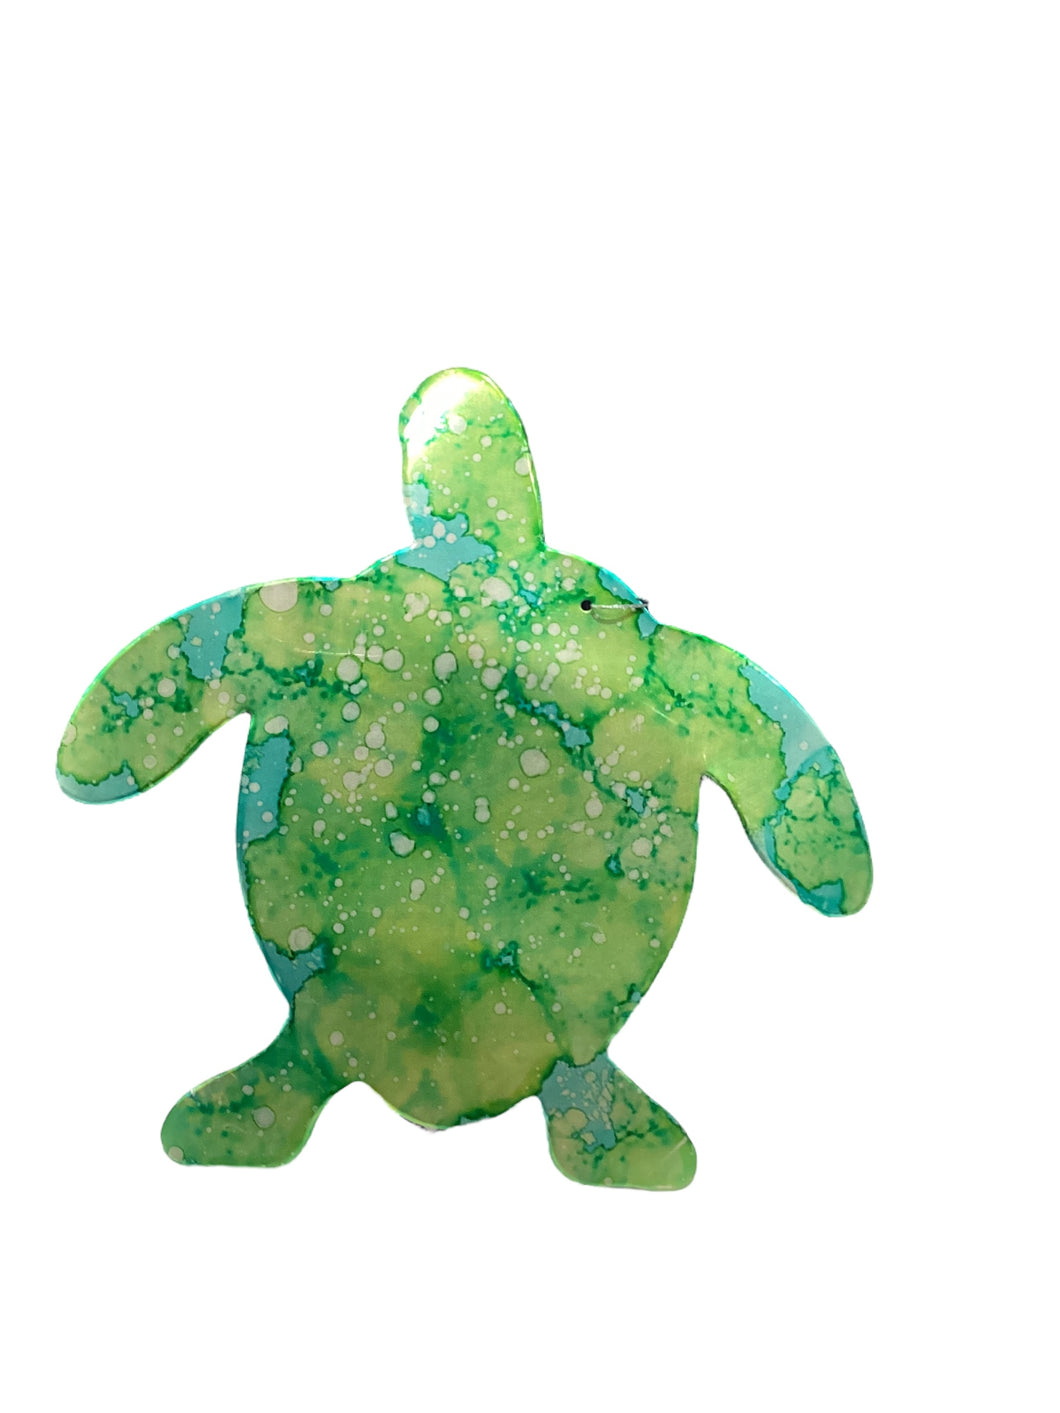 The Swimming Turtle Ornament